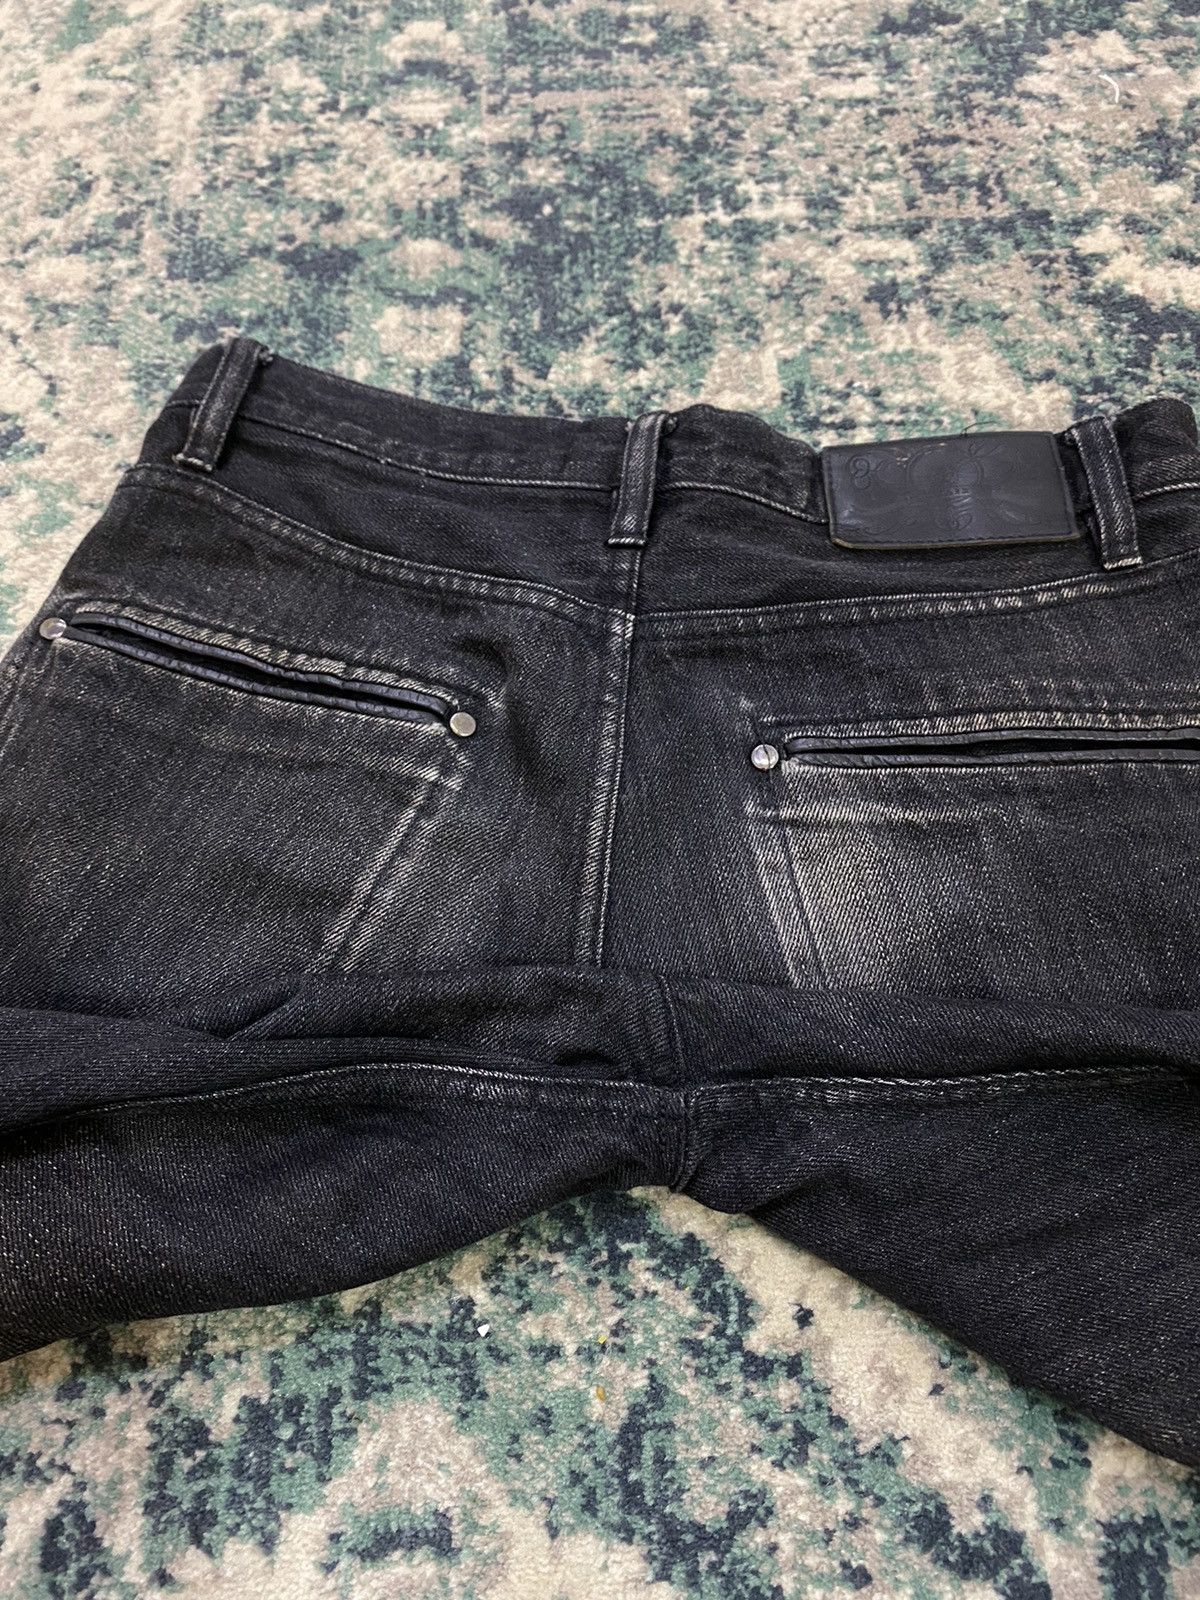 Lemaire Black Leather Lining Pocket Jeans - 23